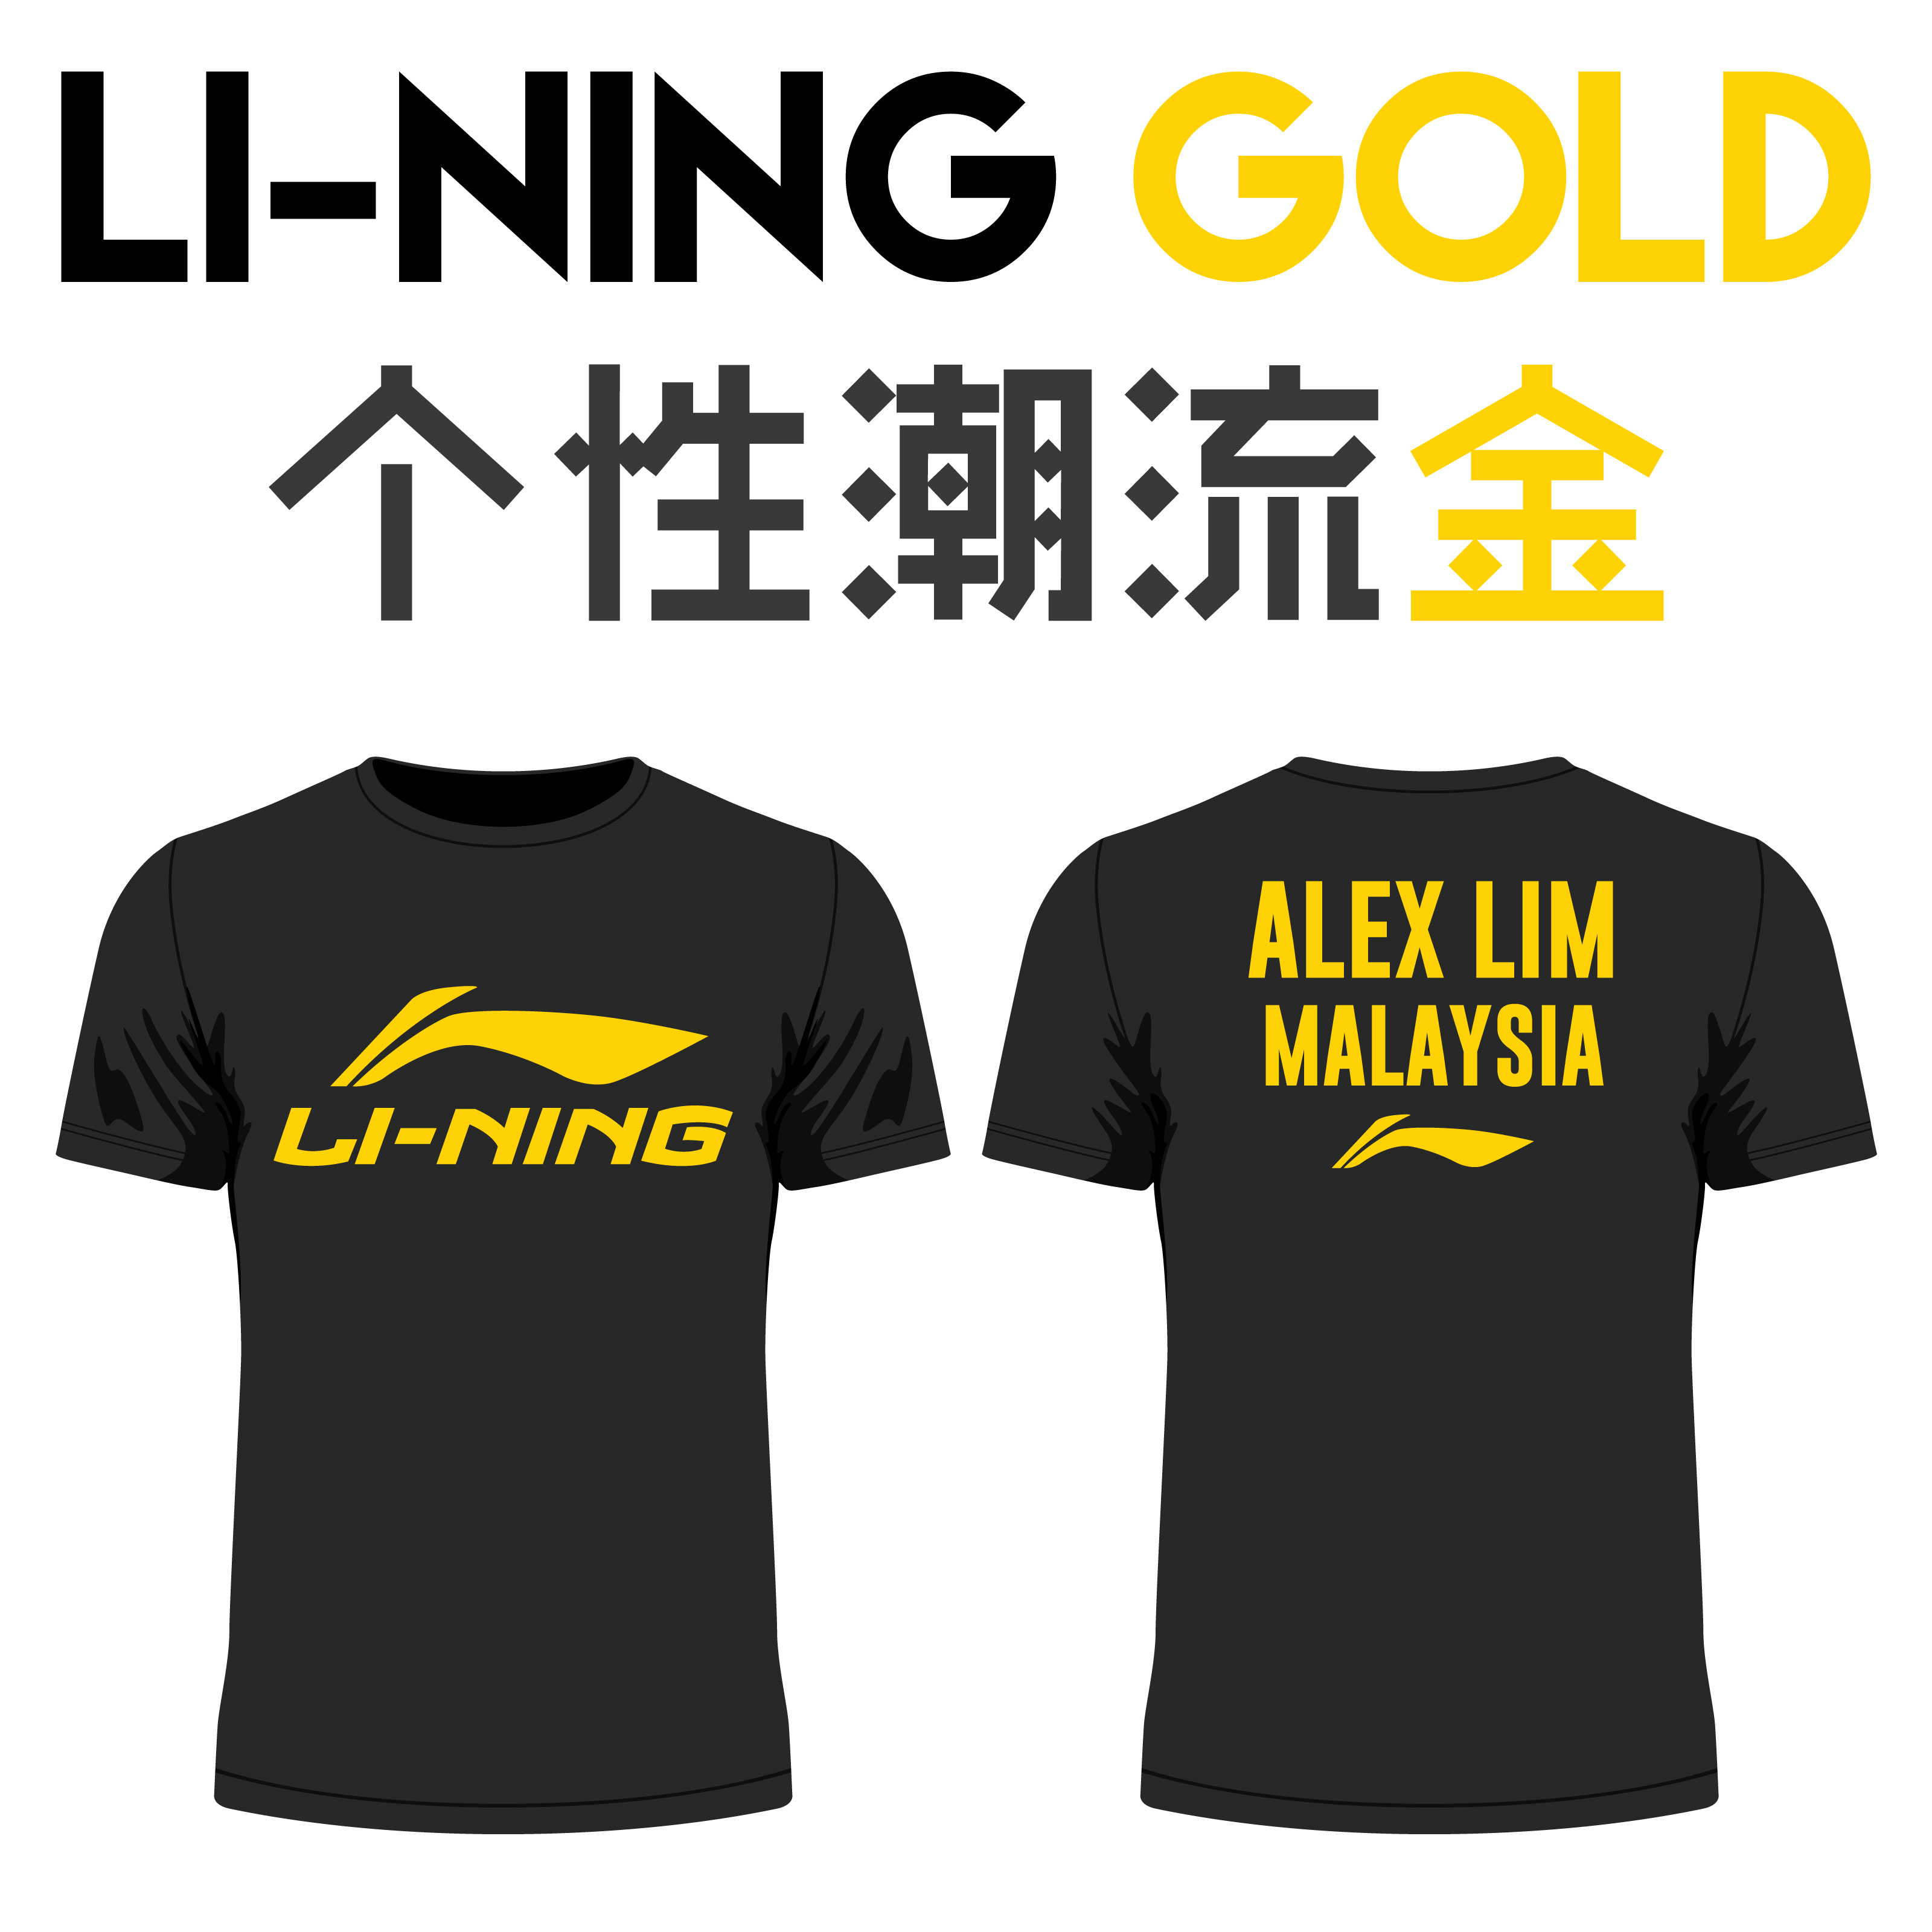 Li-Ning Shirt - Li-Ning Gold